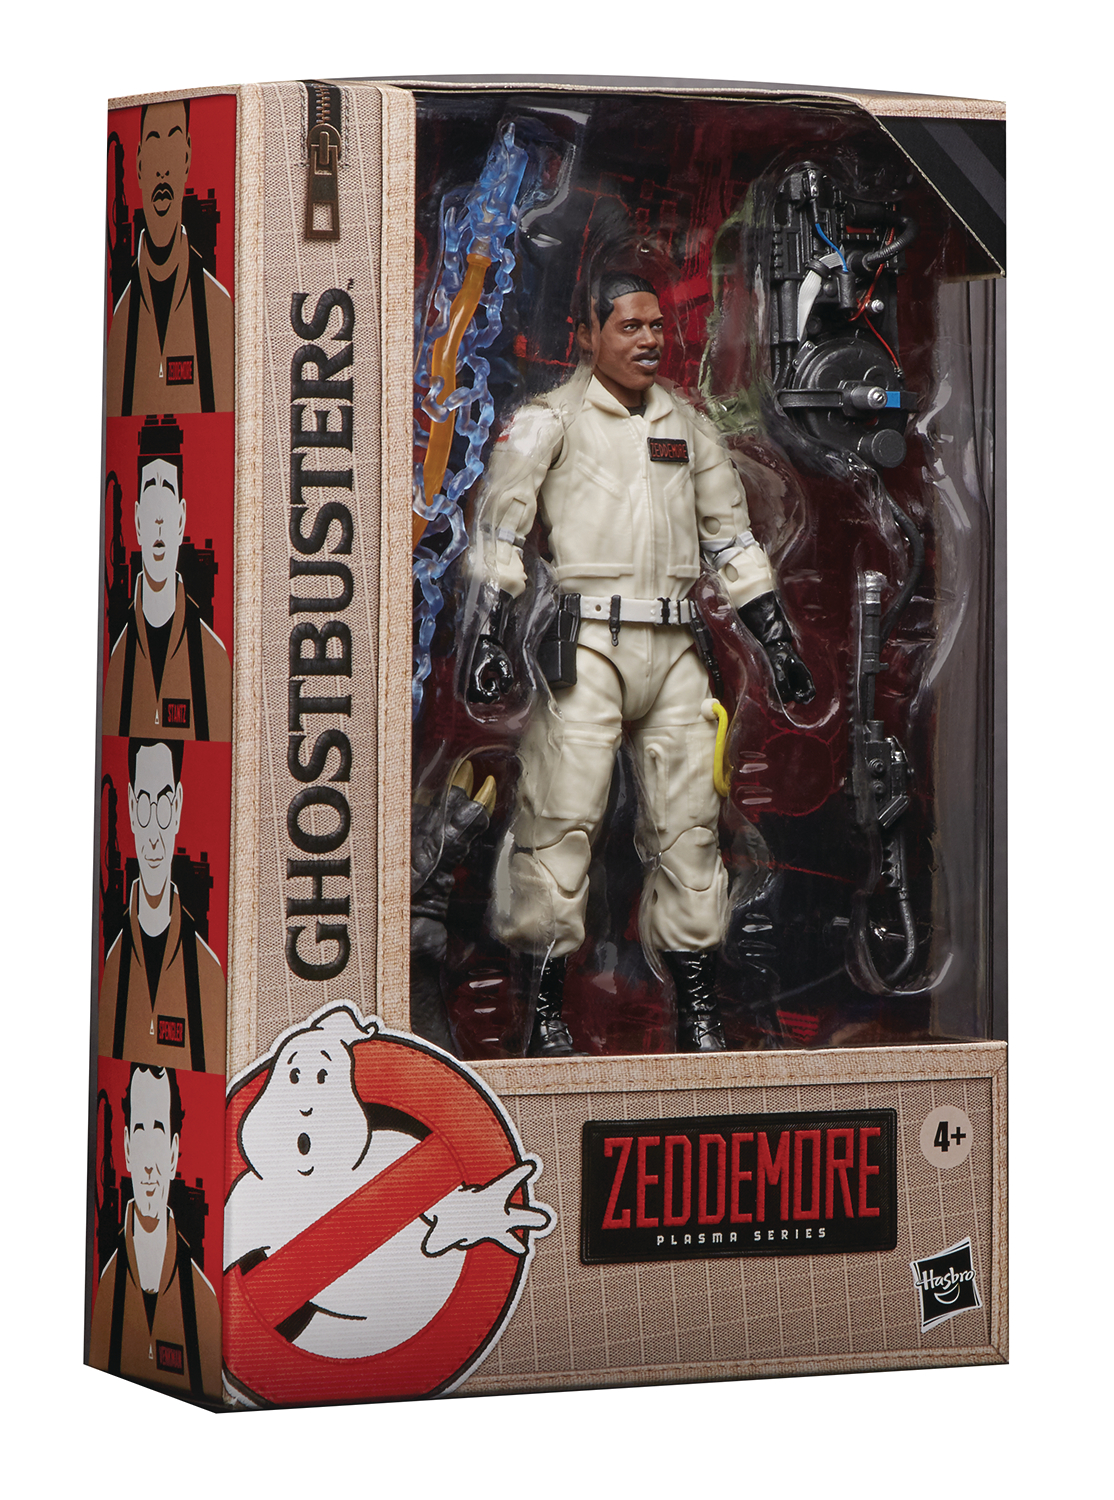 Ghostbusters Plasma Series Zeddemore 6 Inch Action Figure Case